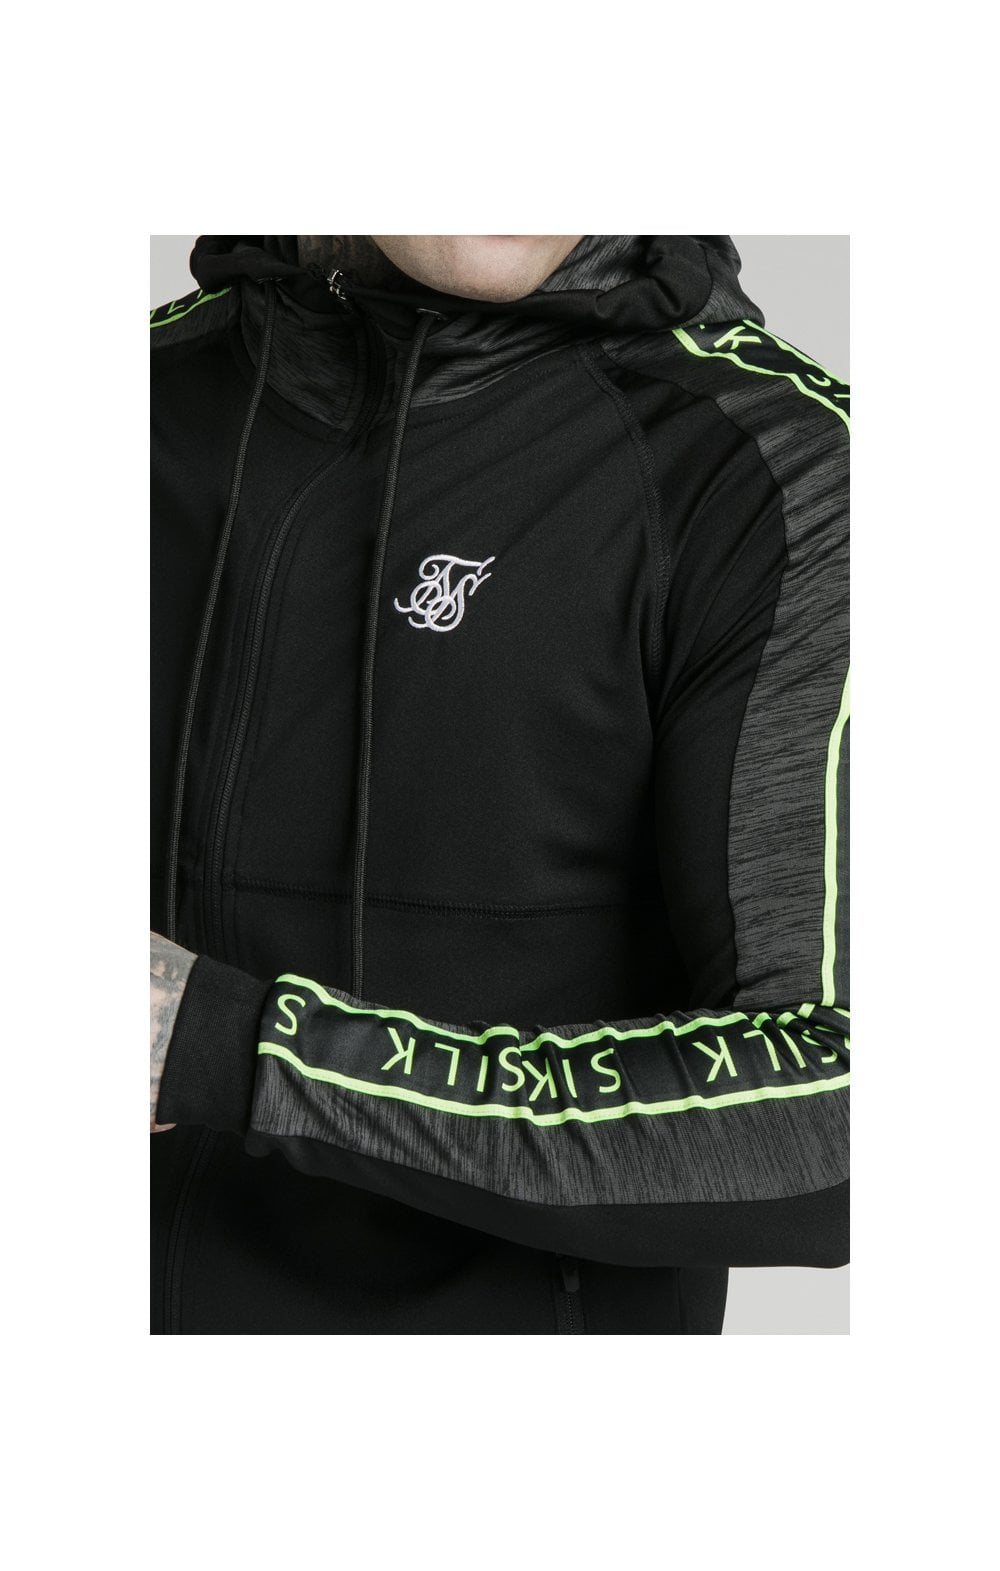 SikSilk Hyper Athlete Zip Through Hoodie - Black & Neon Fluro (1)